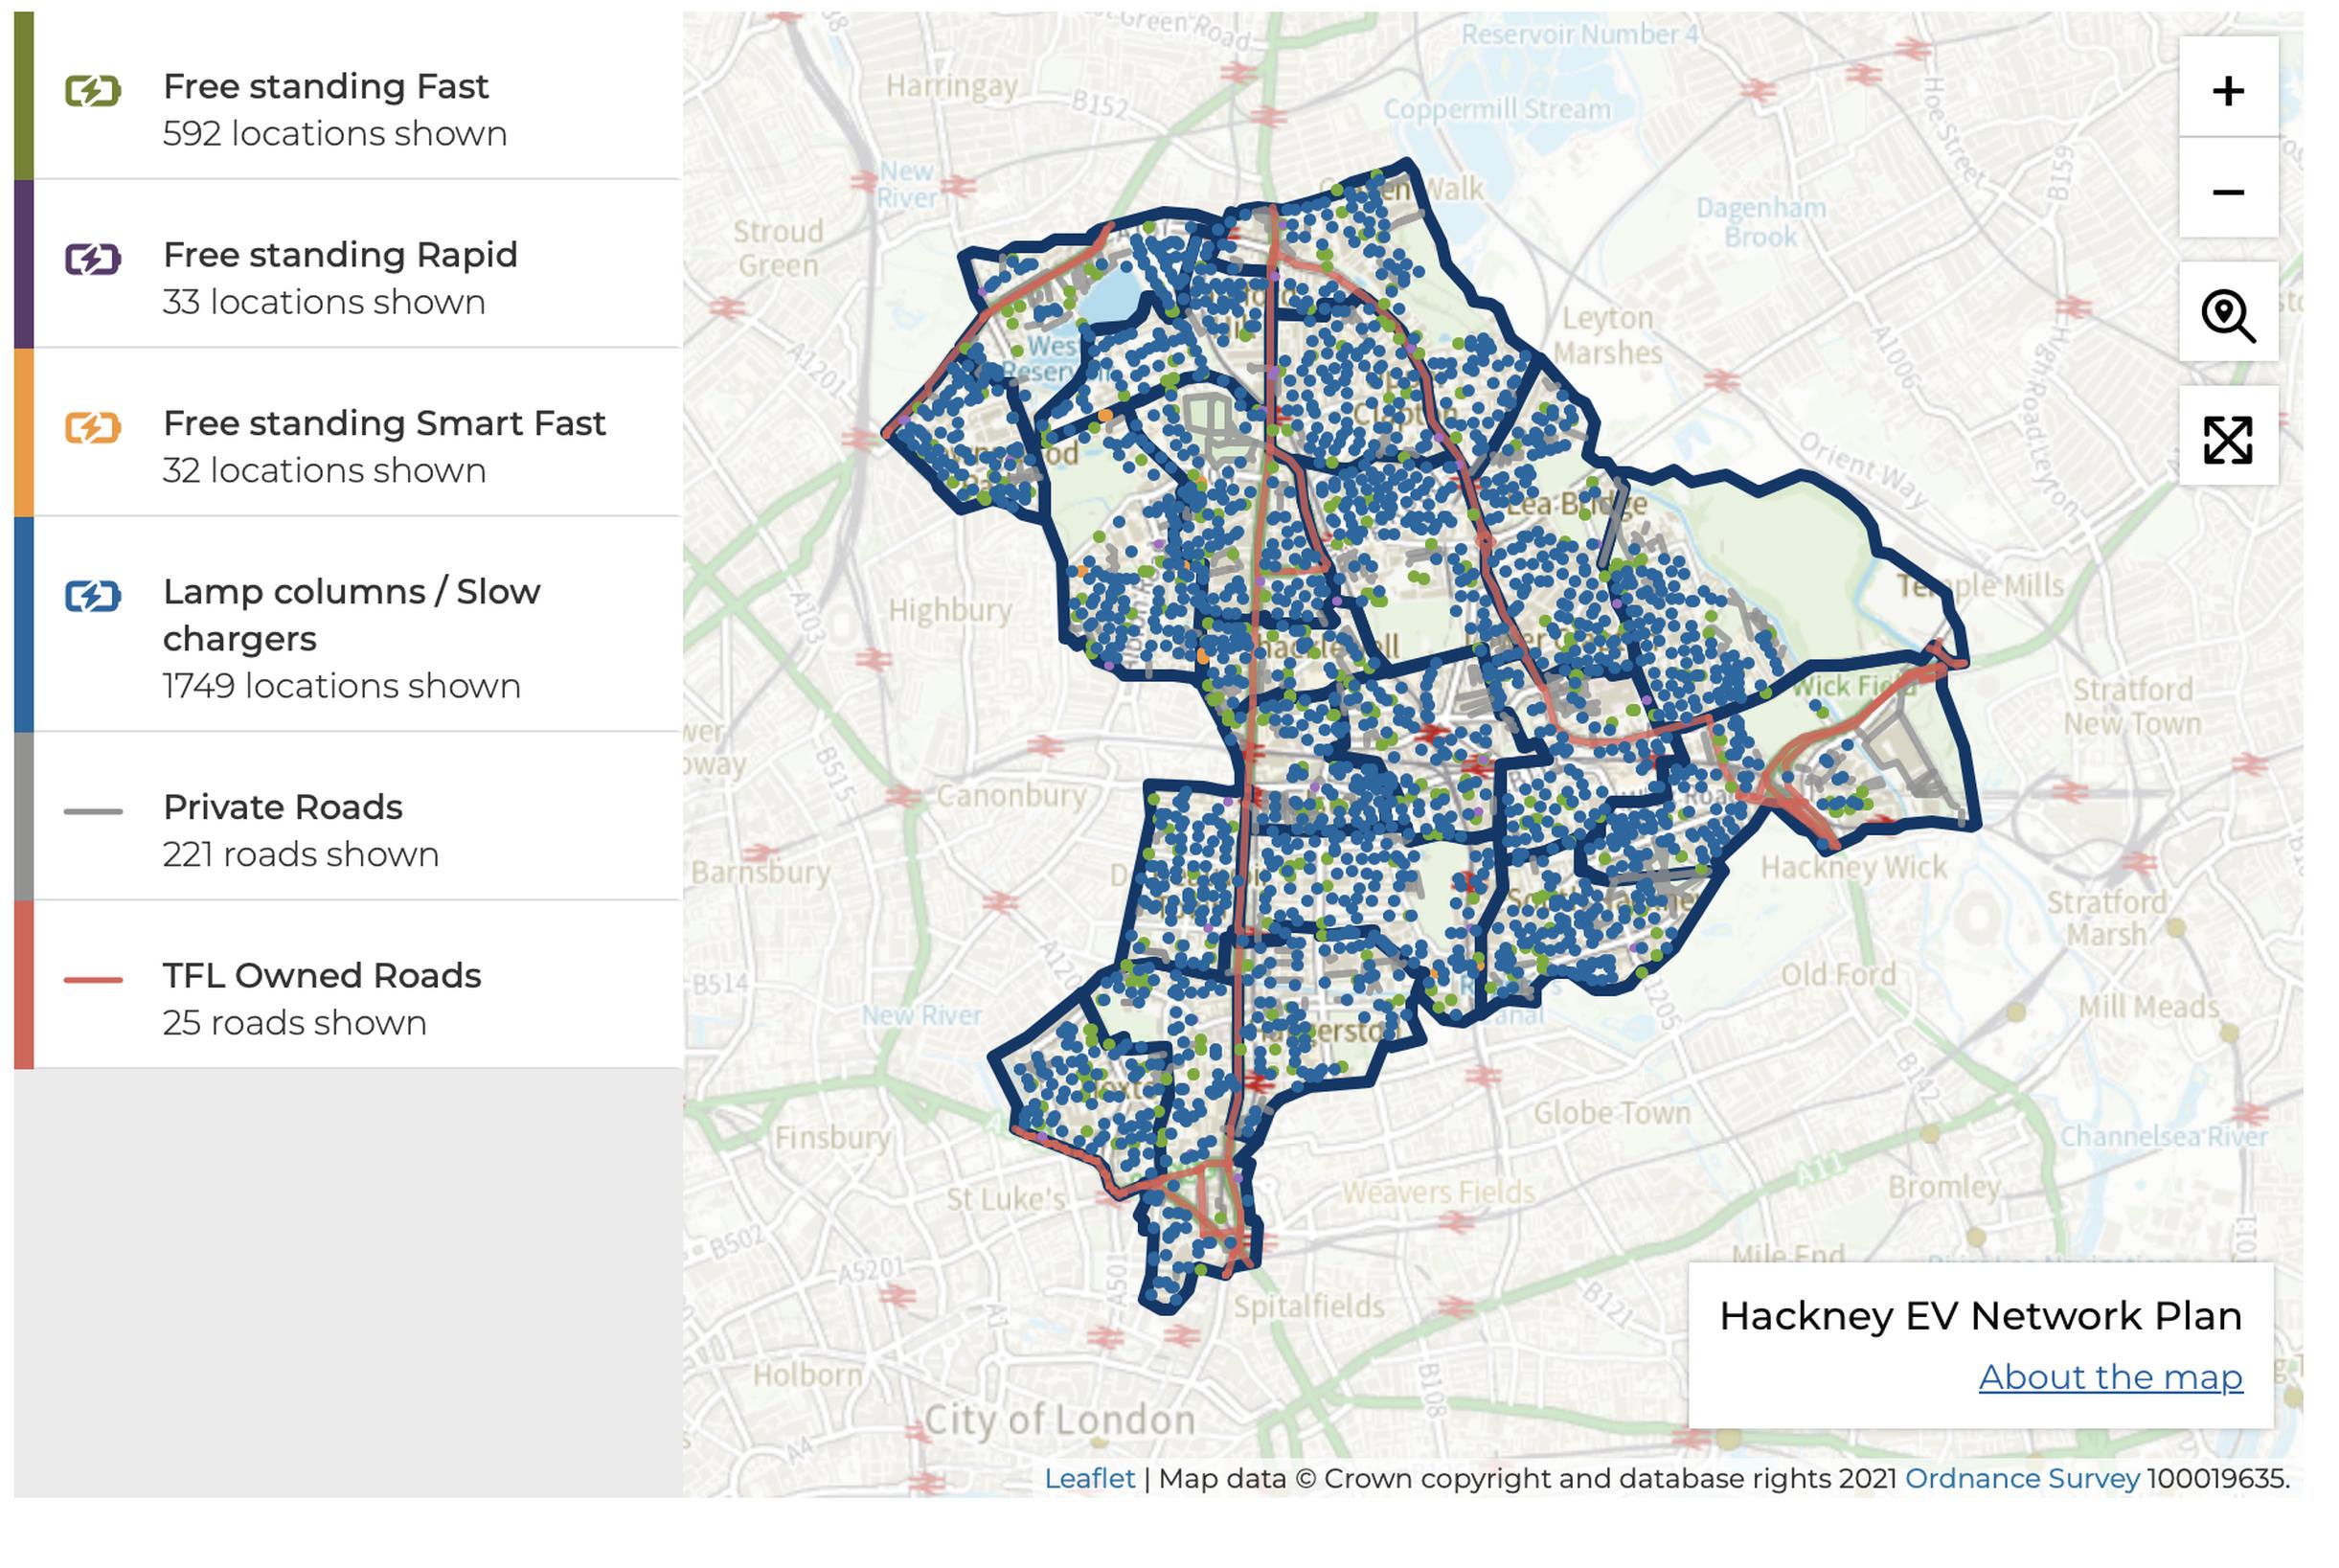 The Hackney EV Network Plan map